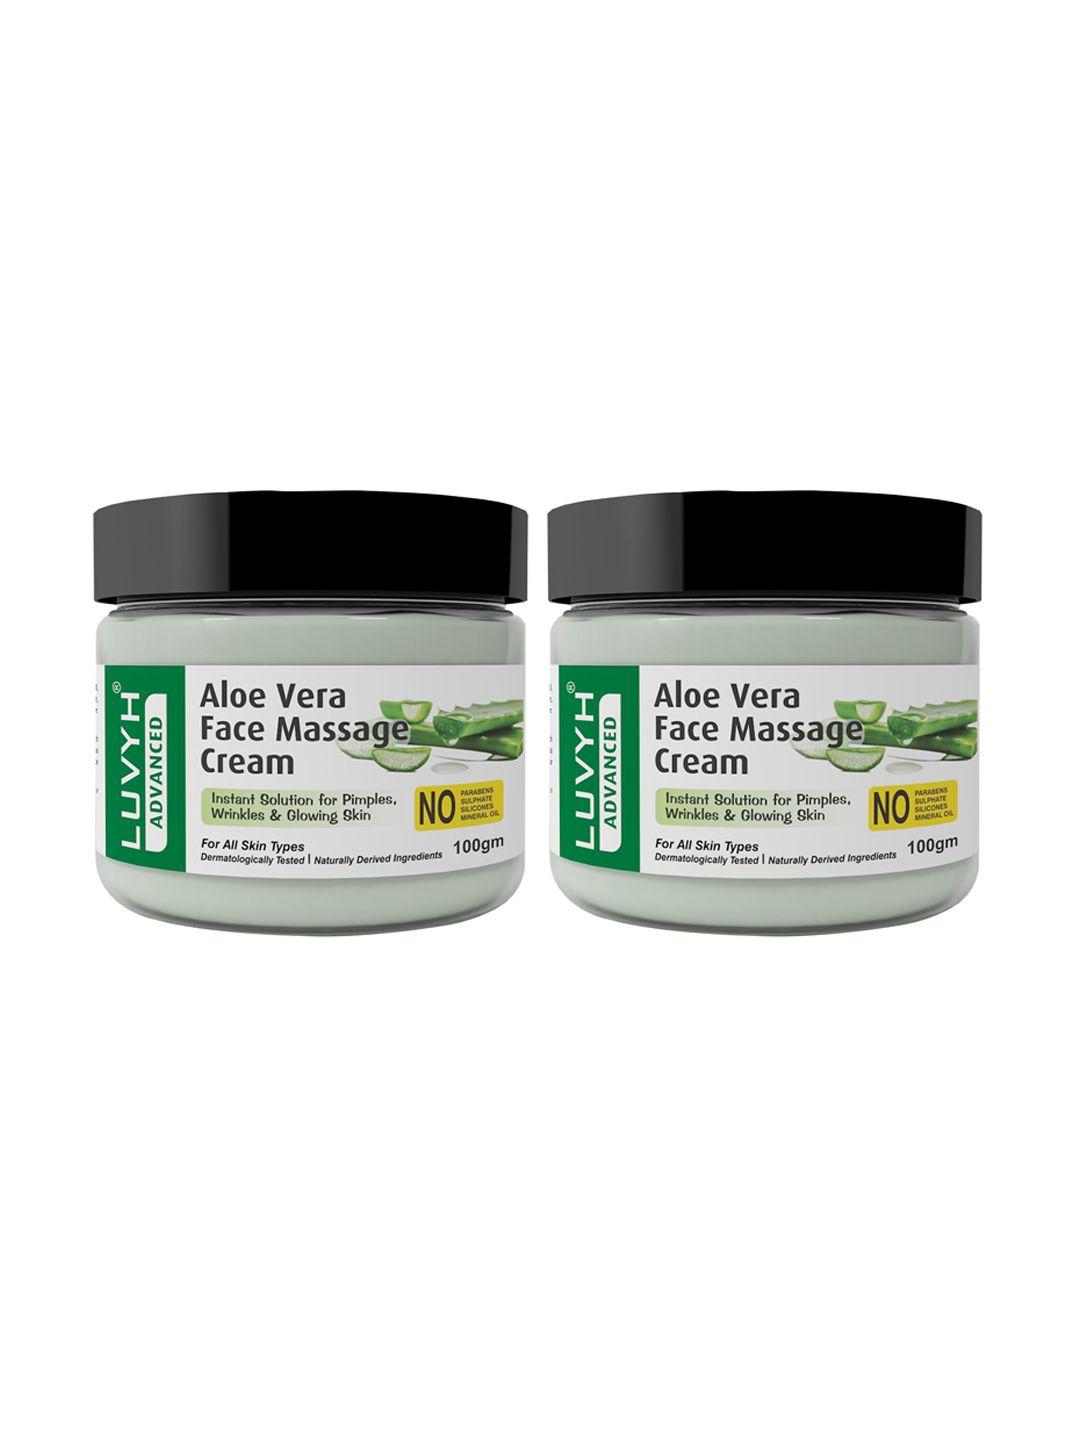 luvyh pack of 2 aloe vera face massage cream- 100g each